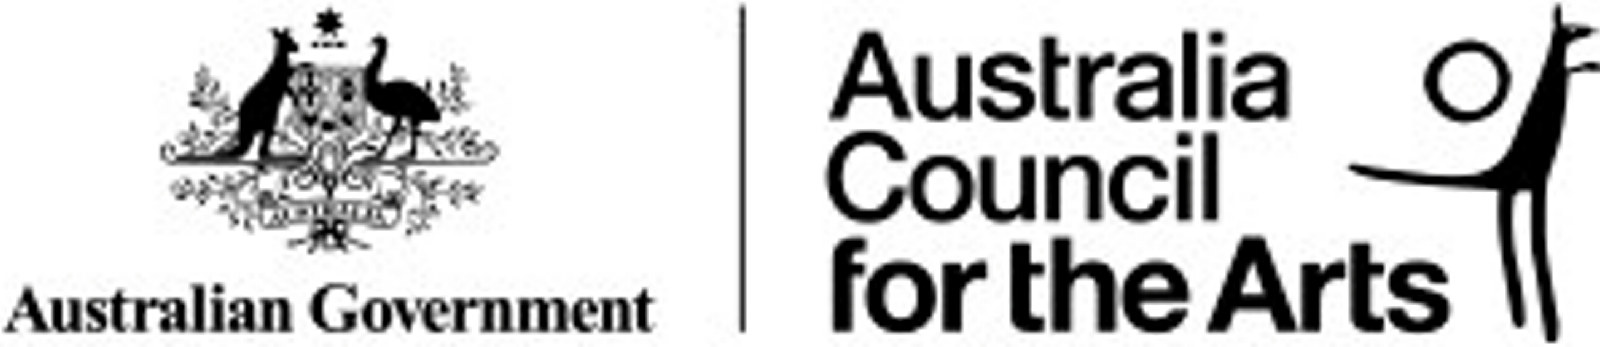 Logo: Australia Council for the Arts